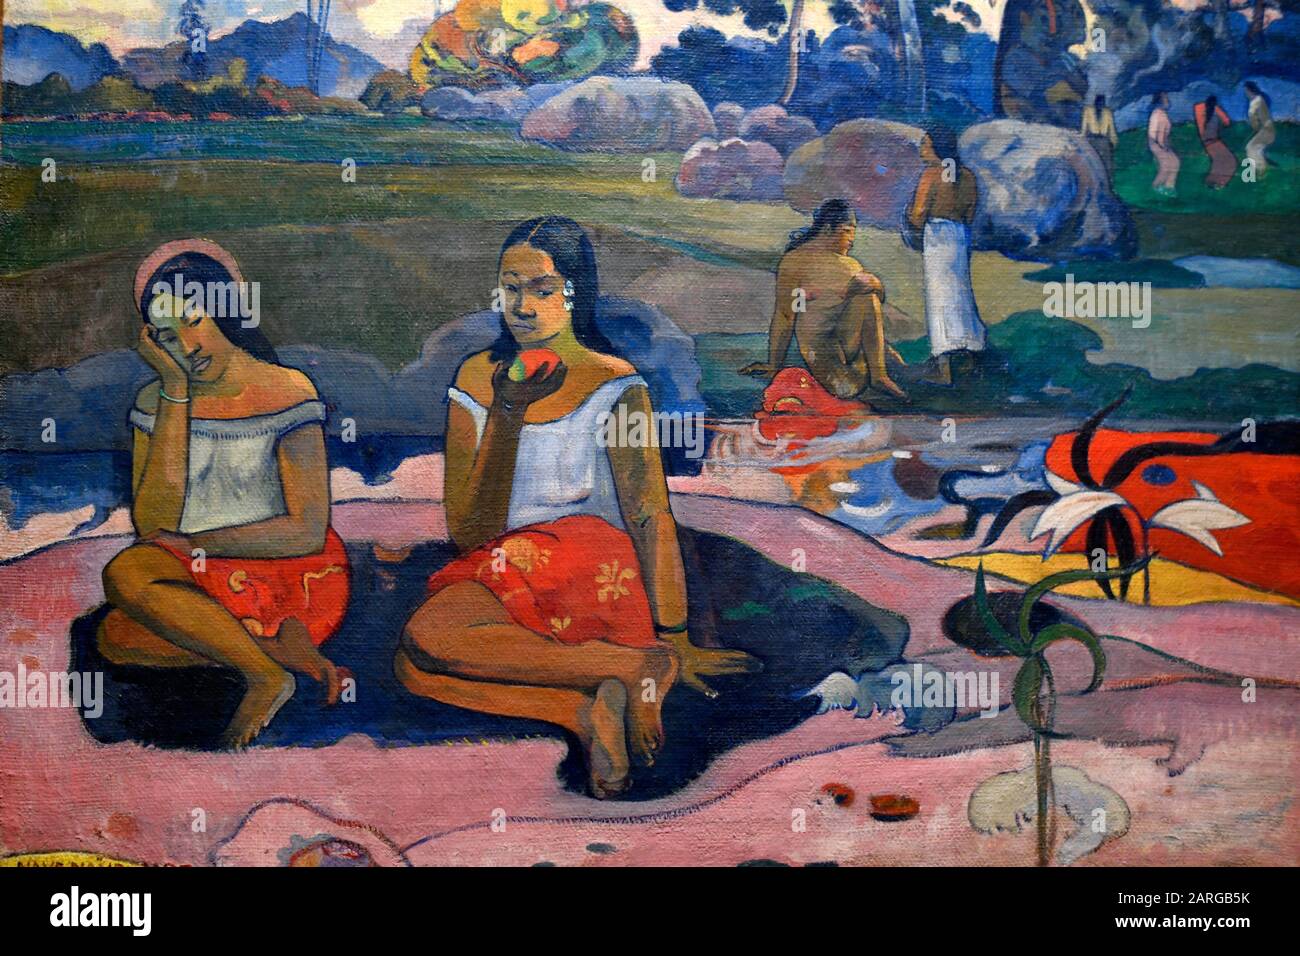 Joy to Rest, 1894, Gemälde von Paul Gauguin, Hermitage Museum, Sankt Petersburg Russland, Europa. Stockfoto